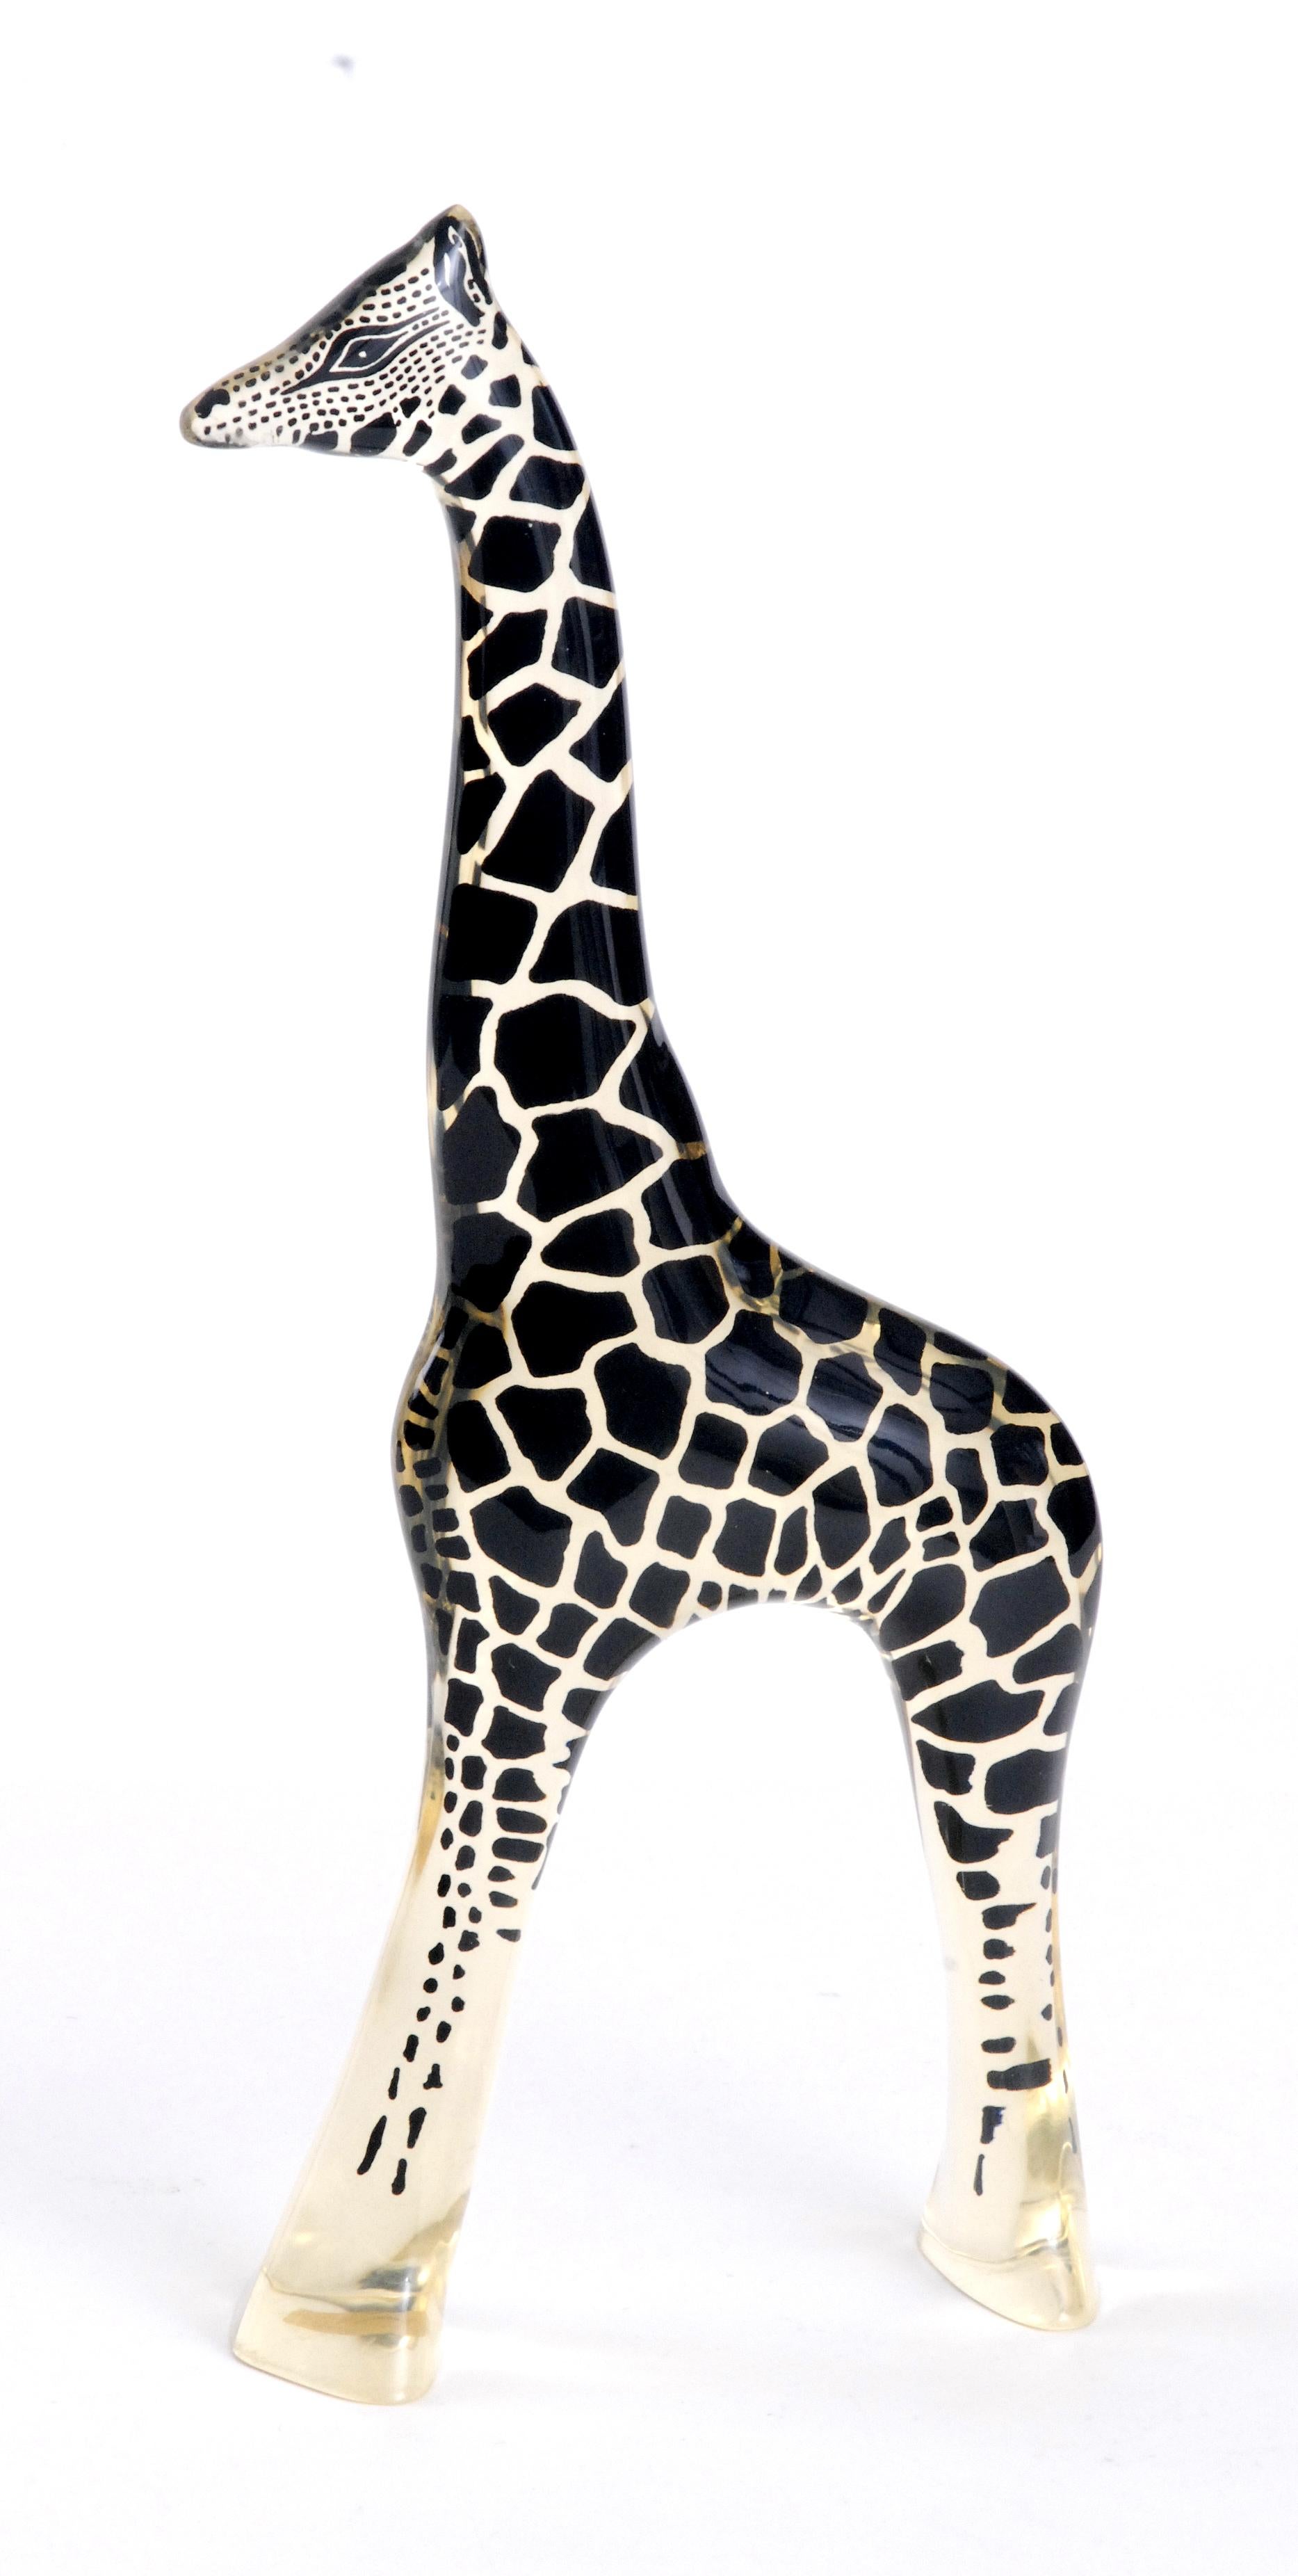 Hand-Crafted Abraham Palatnik Brazil Lucite Giraffe, circa 1970